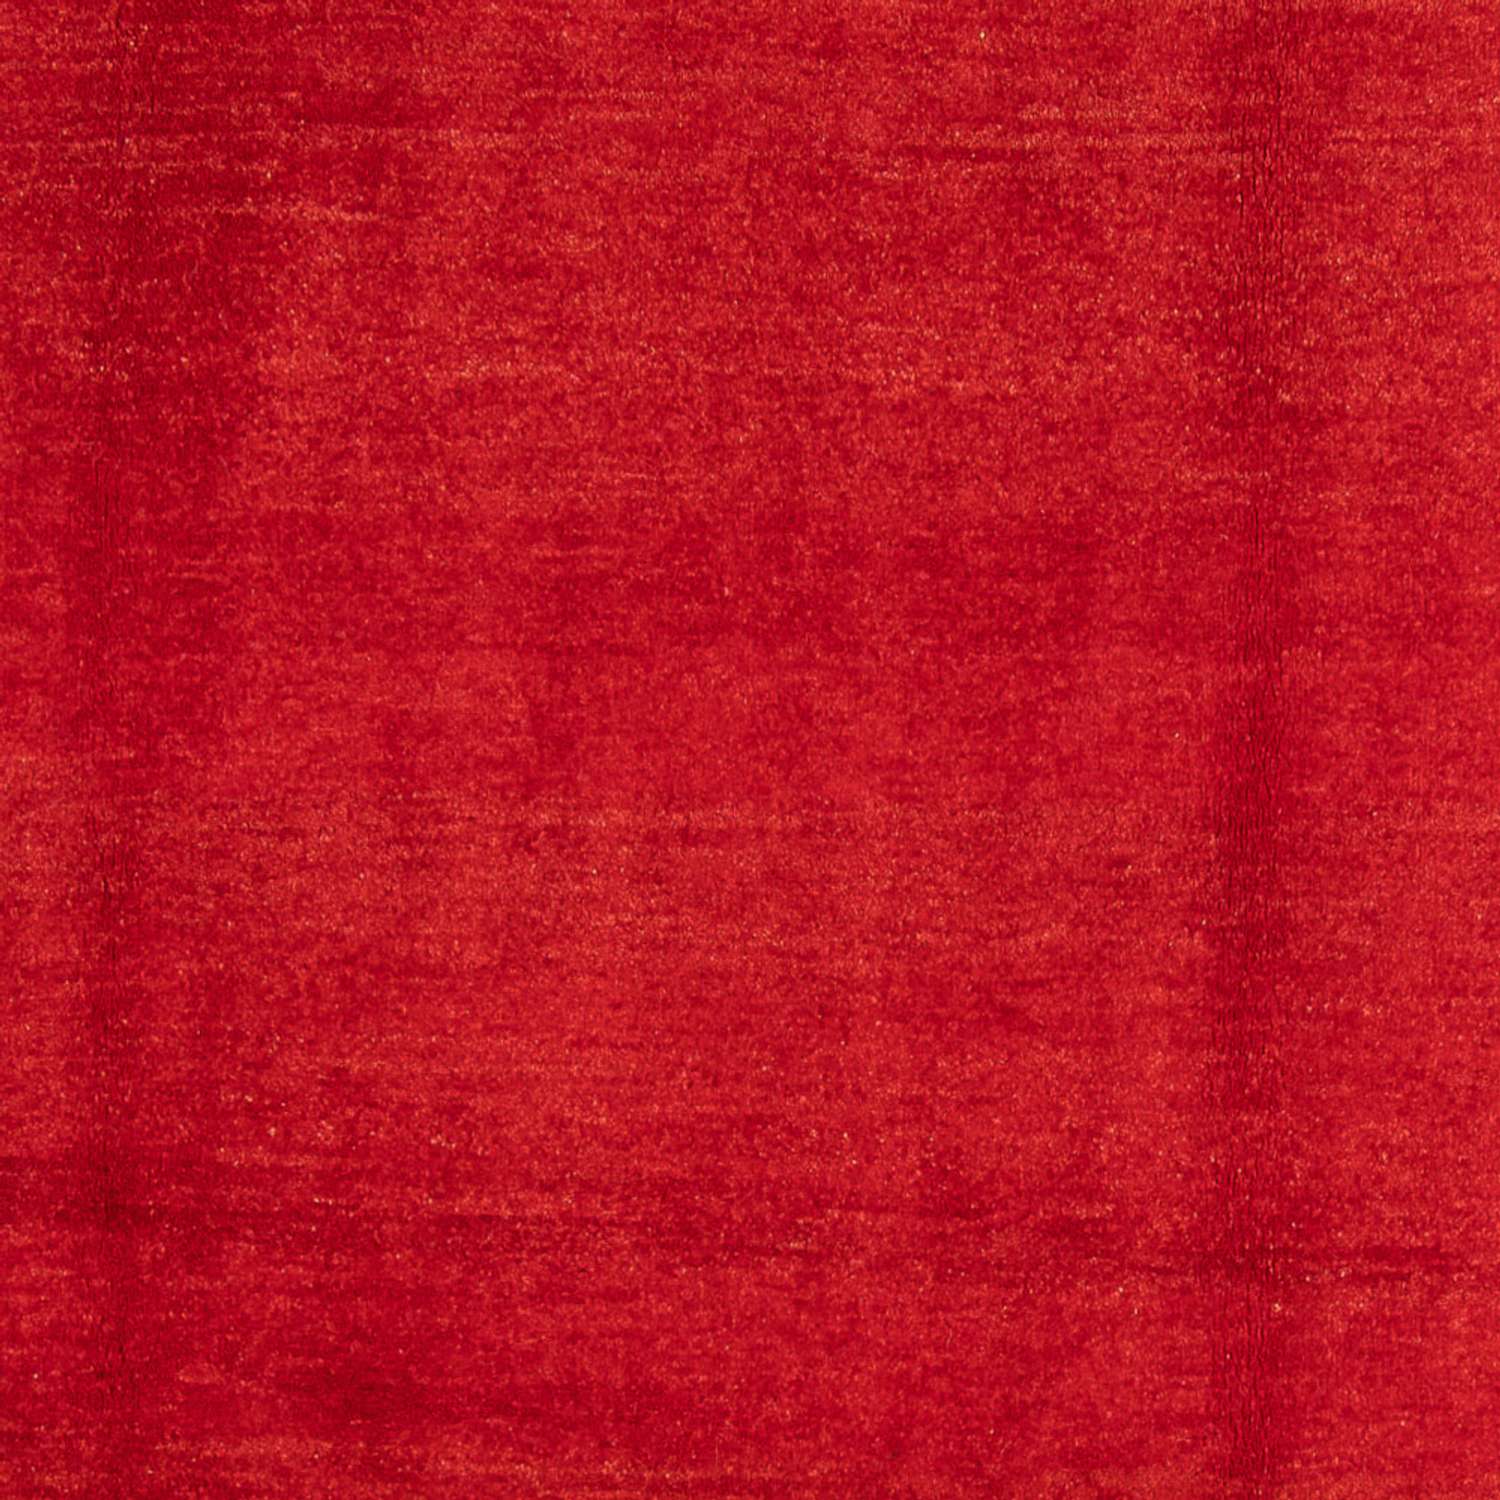 Gabbeh Rug - Perser - 297 x 223 cm - red